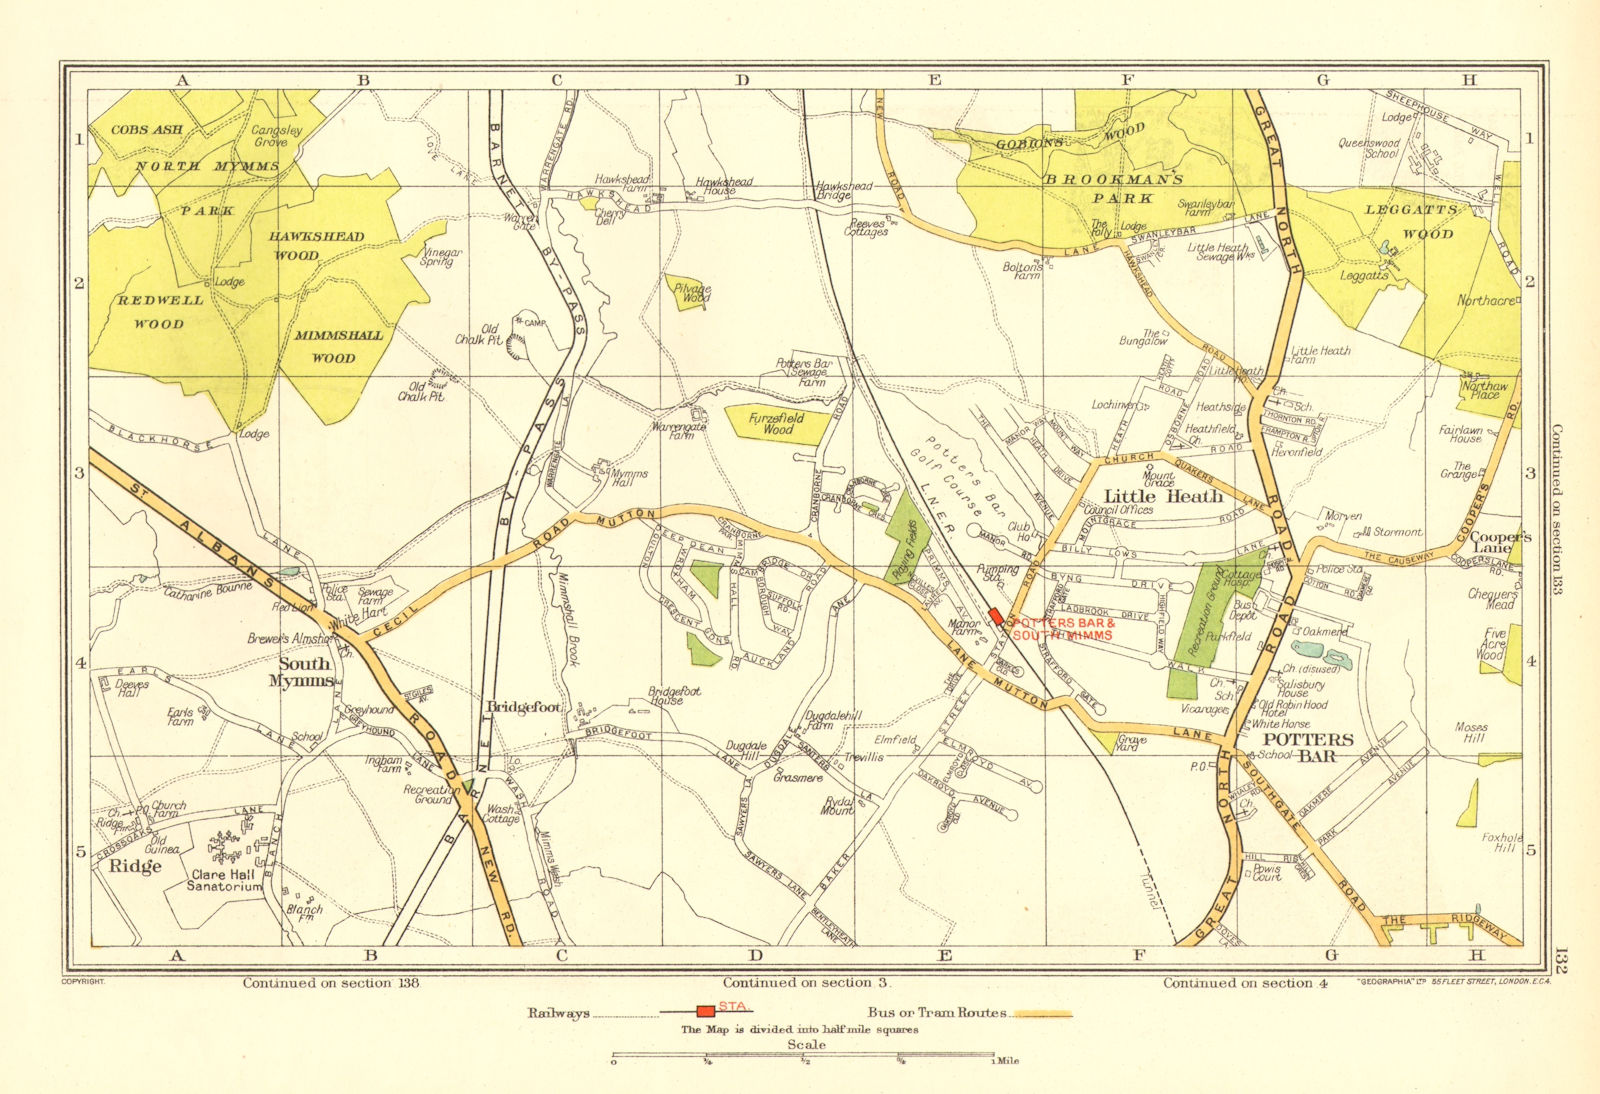 POTTERS BAR. South Mimms Little Heath Brookmans Park Ridge (Herts) 1937 map